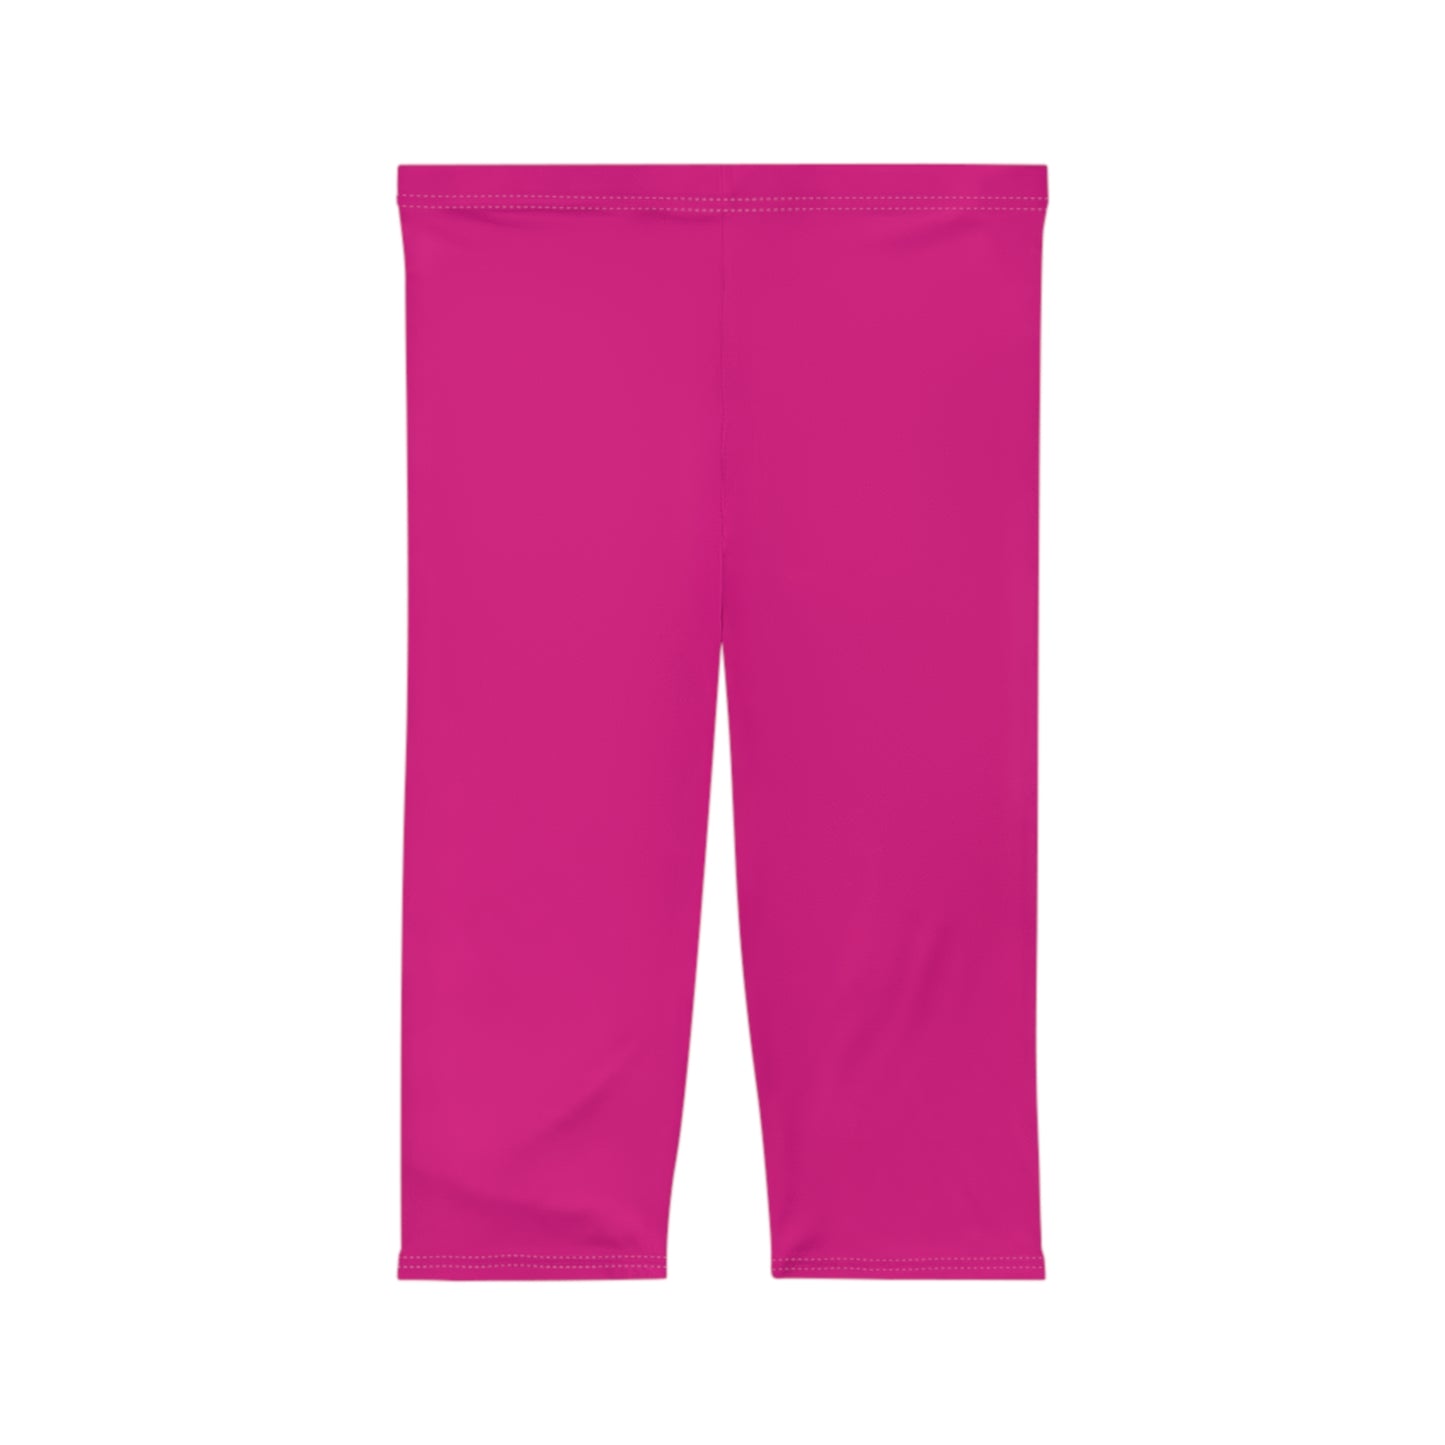 E0218A Pink - Capri Shorts